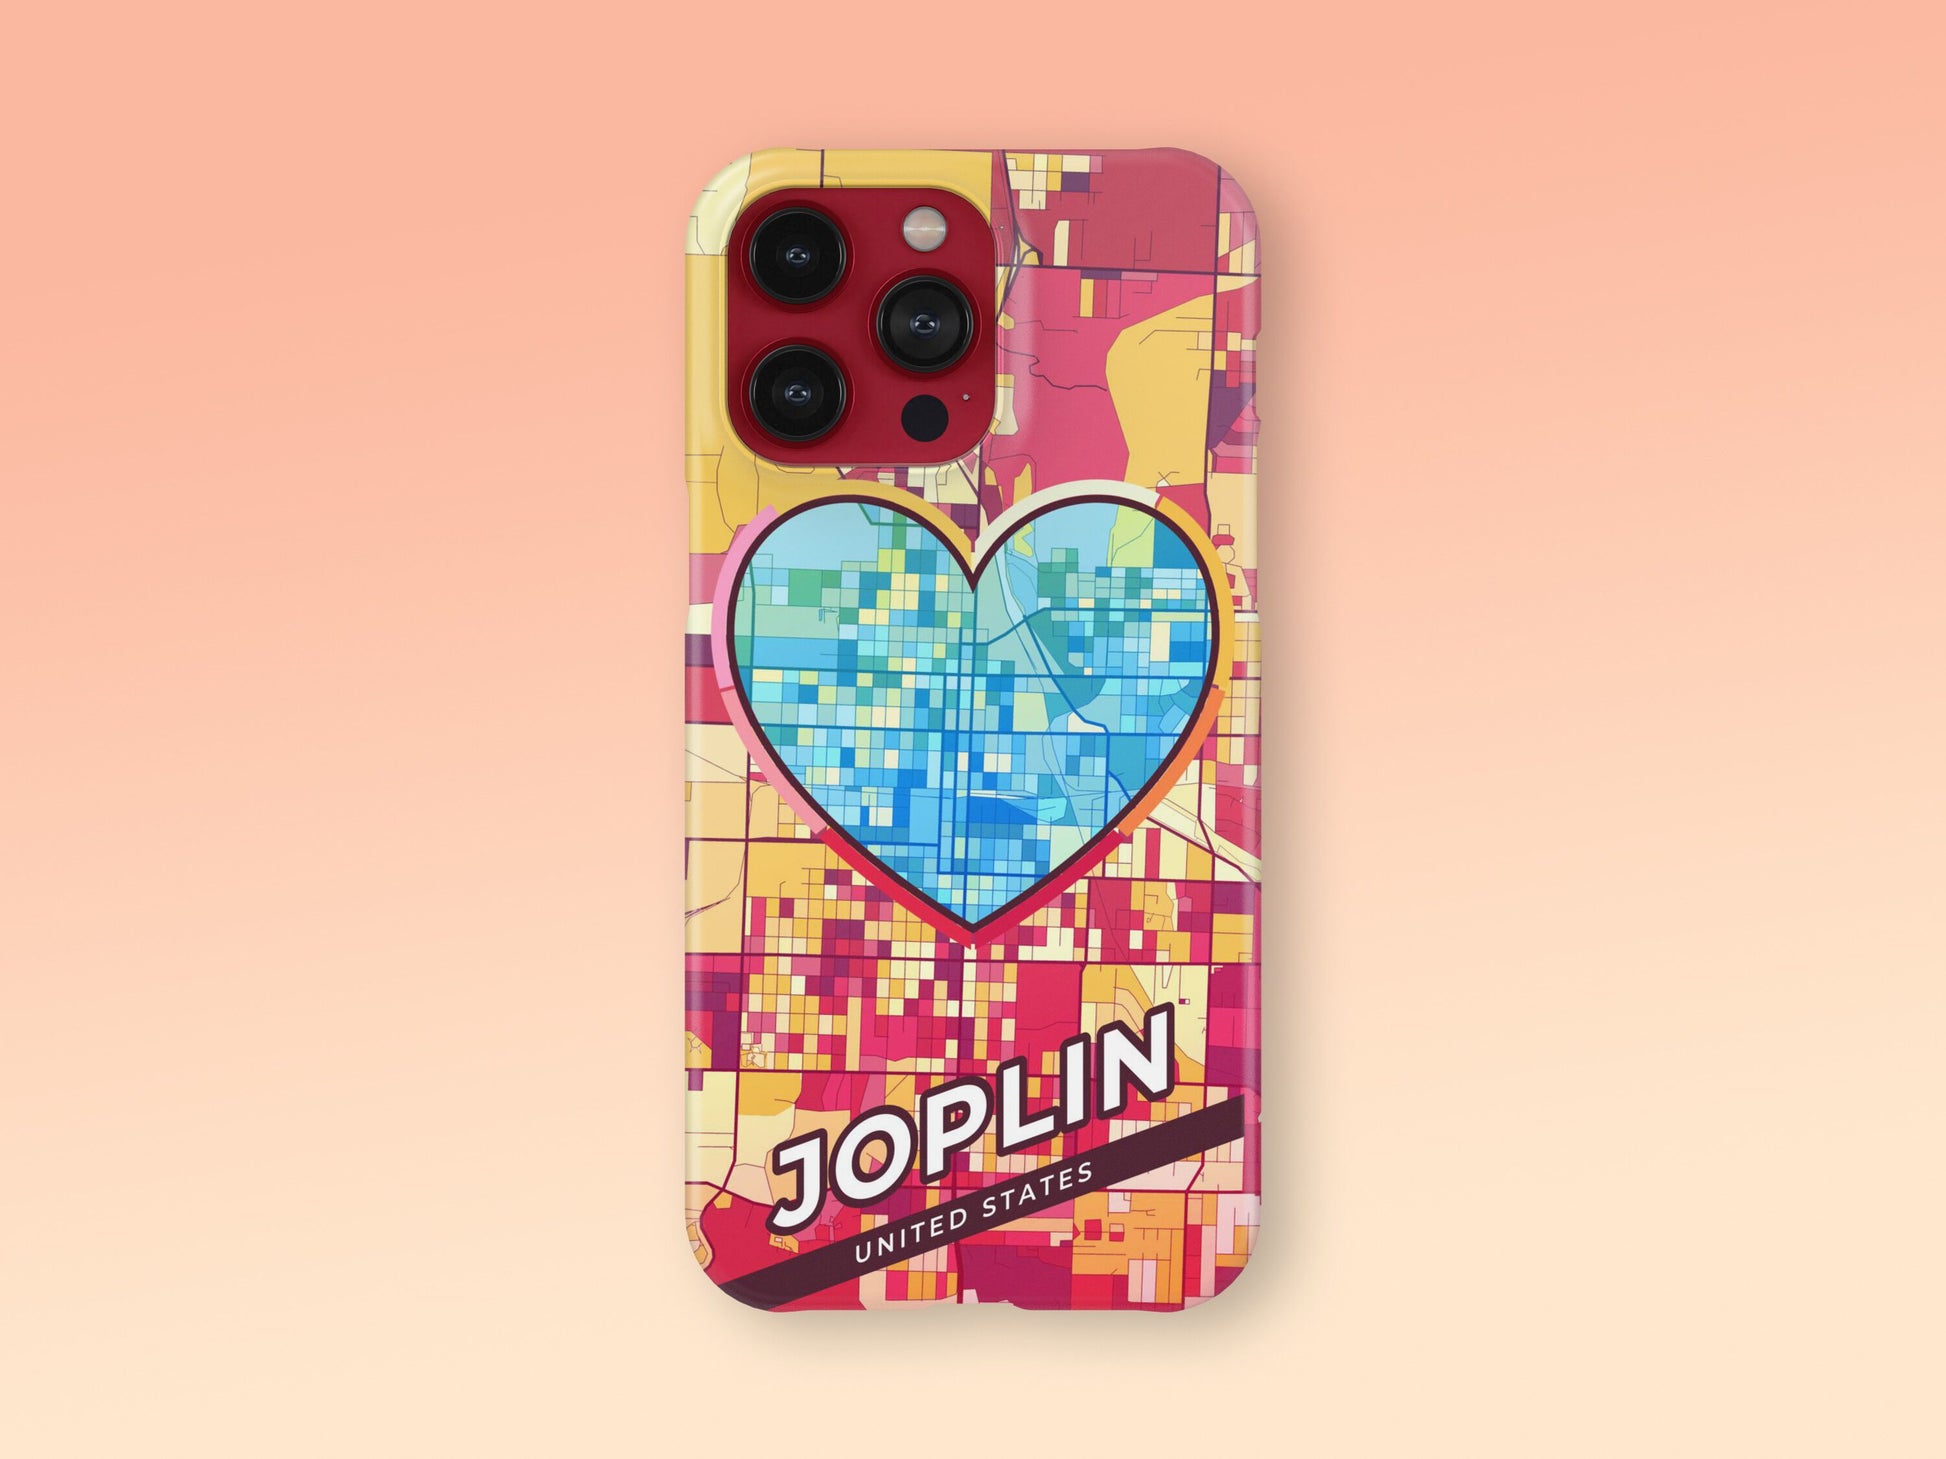 Joplin Missouri slim phone case with colorful icon. Birthday, wedding or housewarming gift. Couple match cases. 2